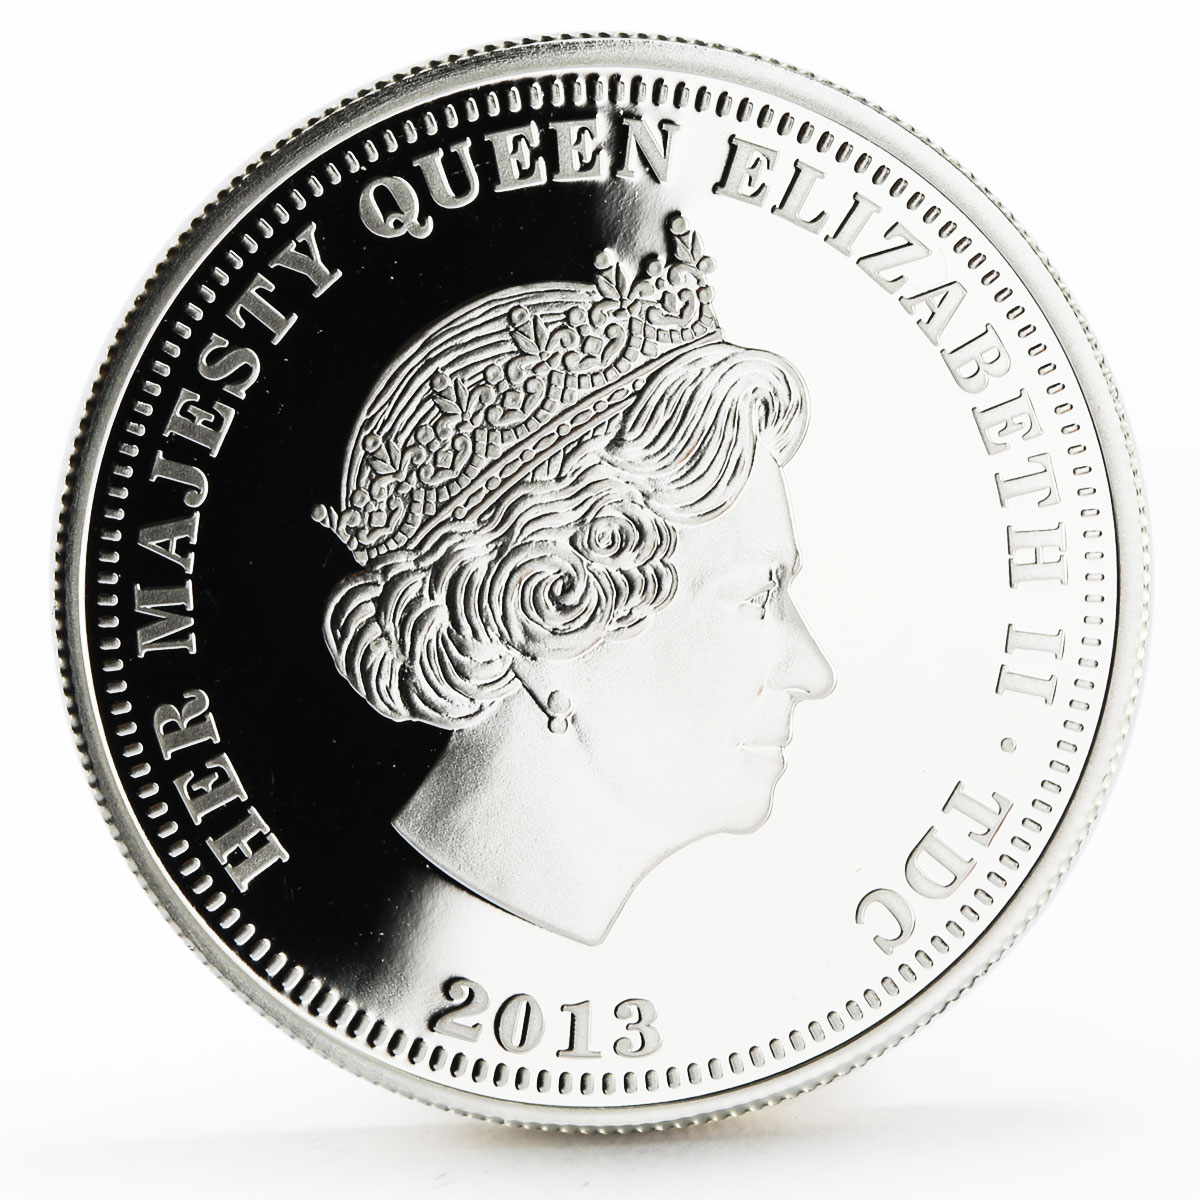 Tristan da Cunha 1 guinea The History of the Guinea William III silver coin 2013